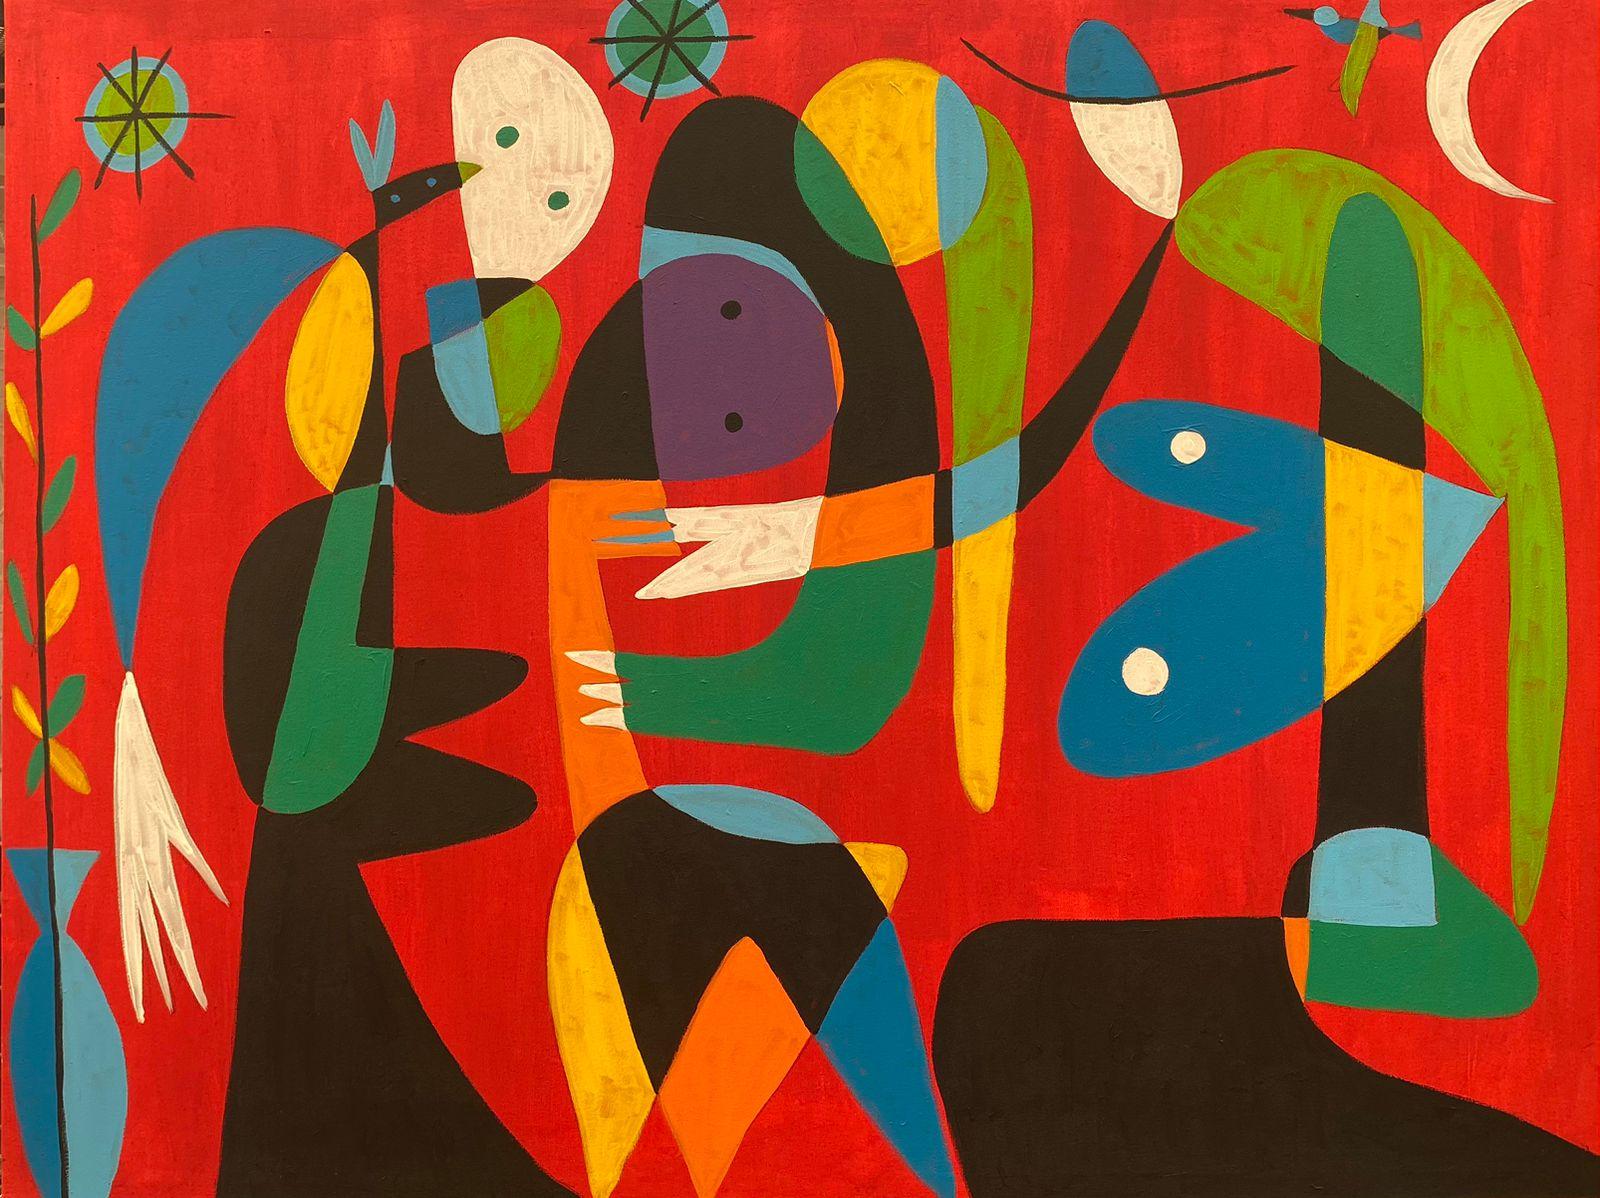 Contemporary Art, Abstract Painting
Acrylic on canvas
130x170cm
Signed 





About the artist
Enrique Pichardo (Mexico City, 1973) graduated from Escuela Nacional de Pintura, Escultura y Grabado (ENPEG) “La Esmeralda”. As a Mexican Contemporary